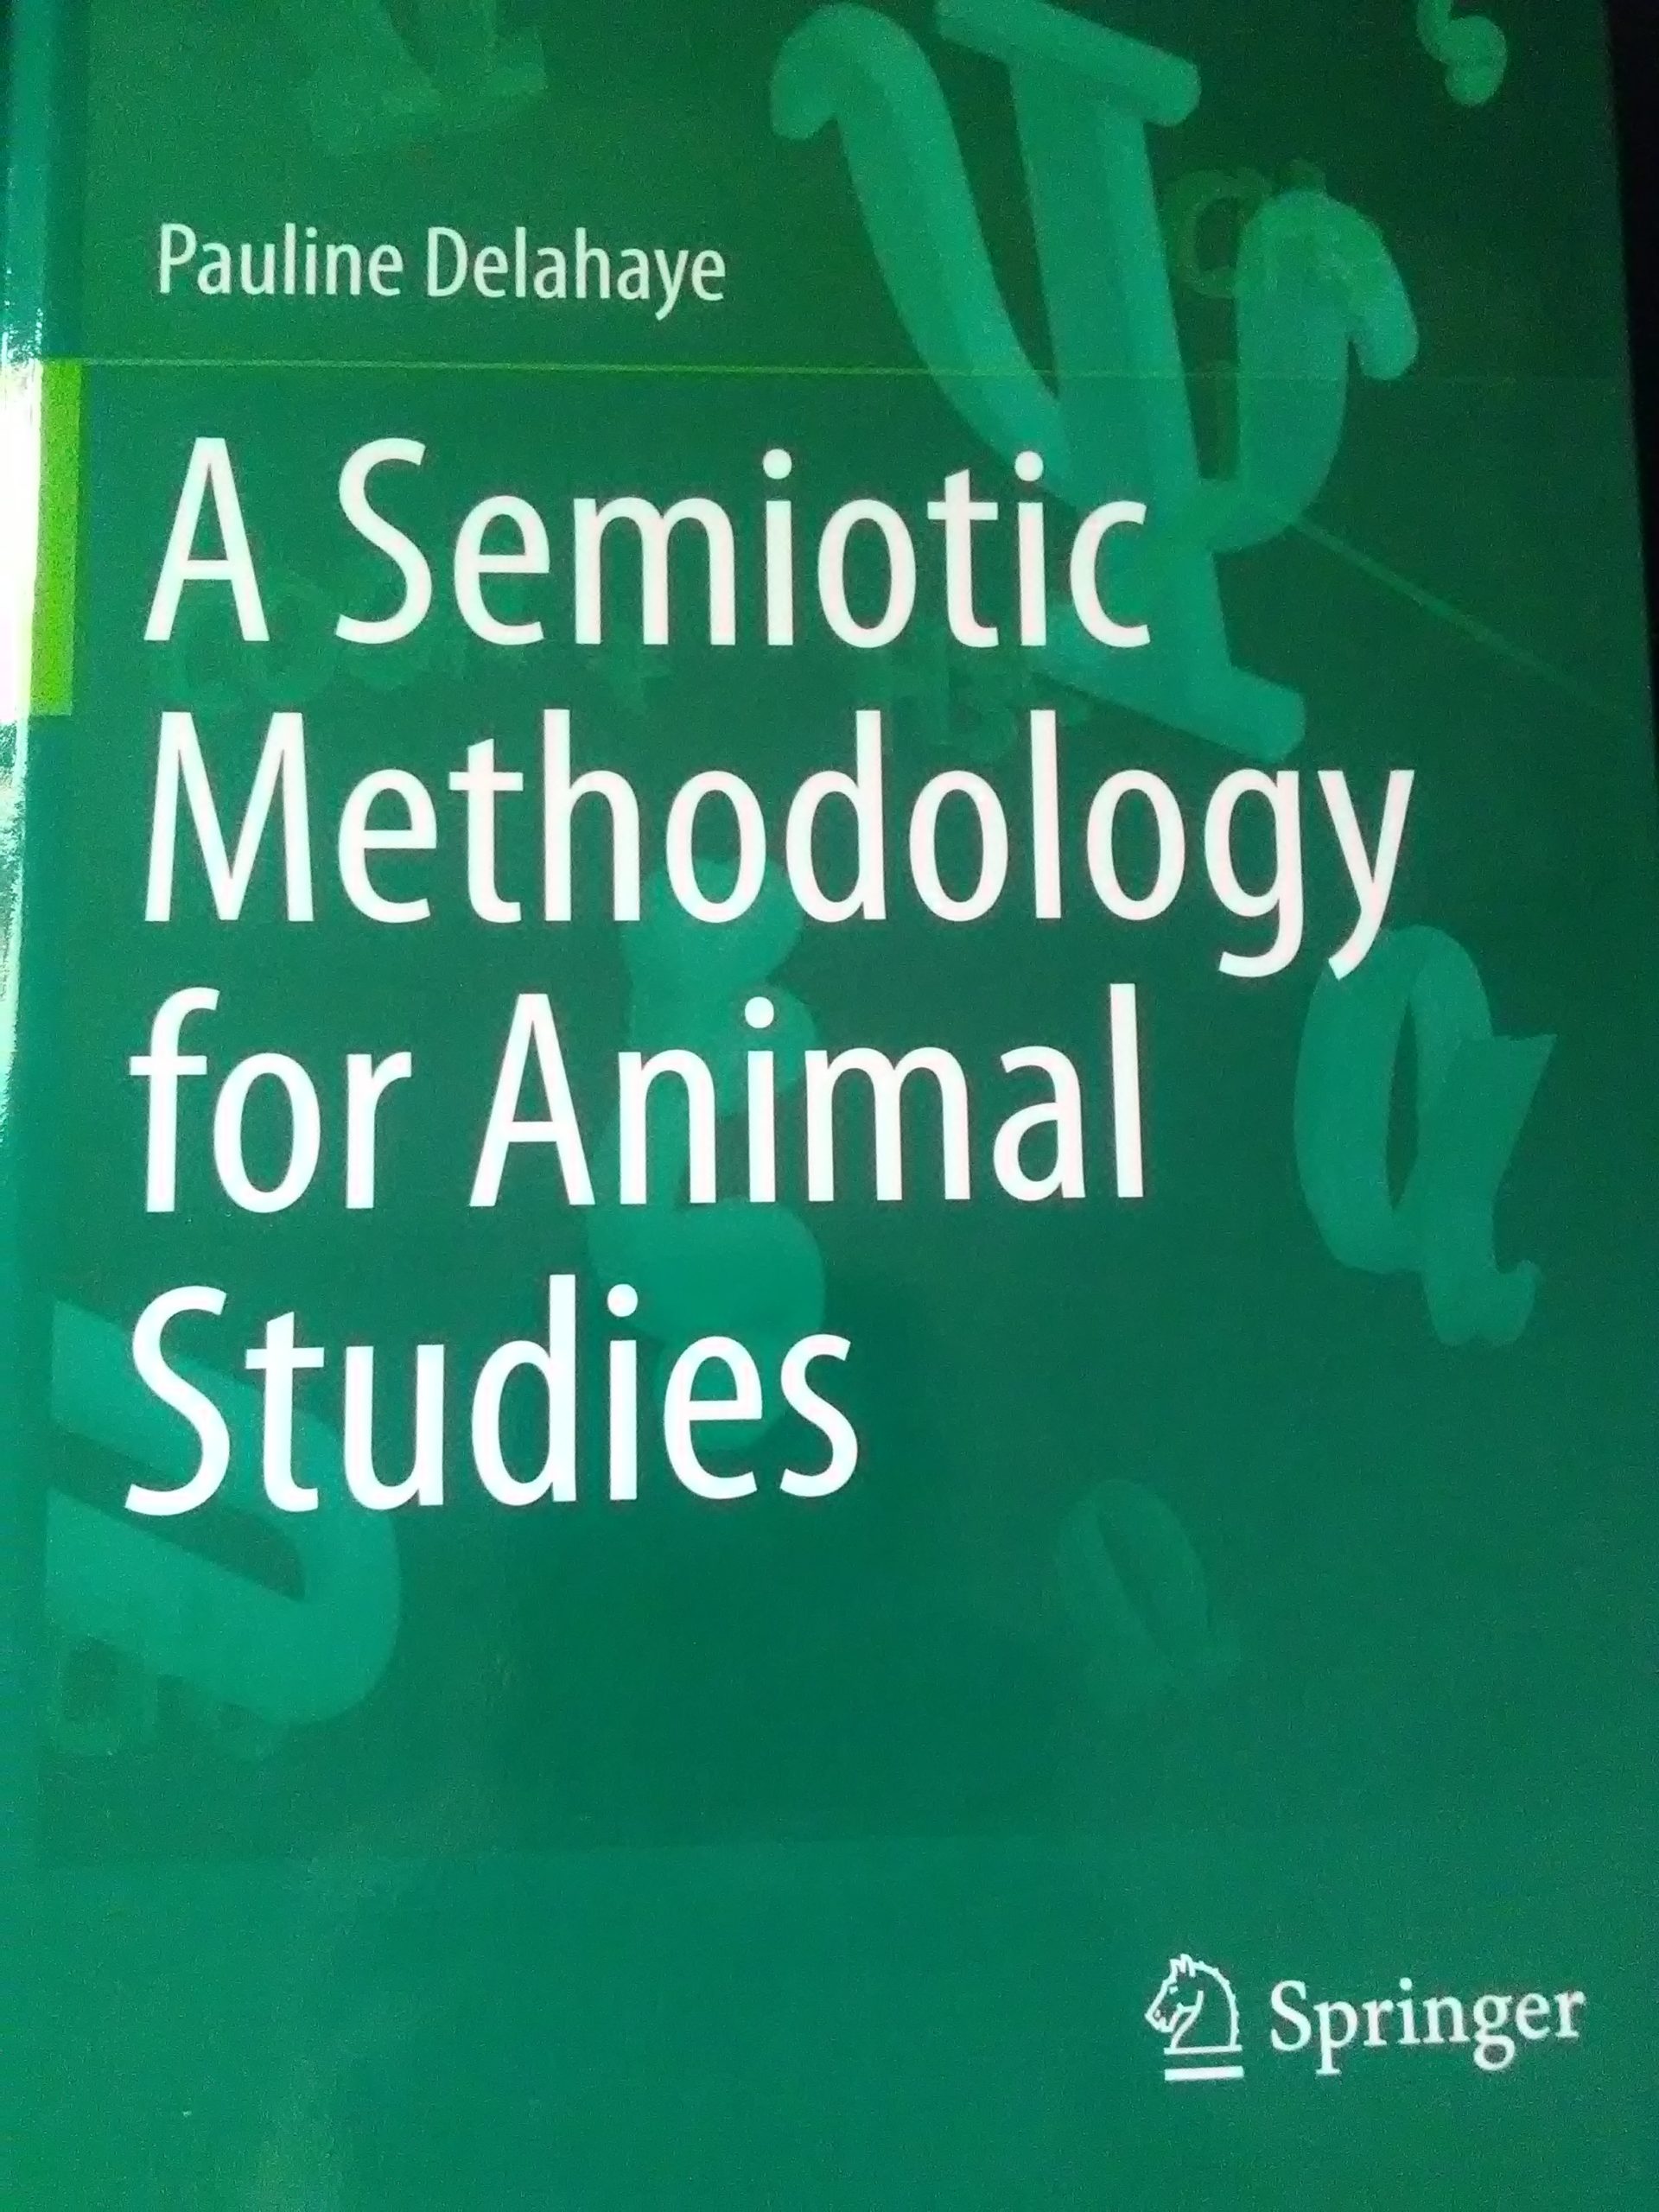 [Parution] A Semiotic Methodology for Animal Studies, P.Delahaye (Springer)